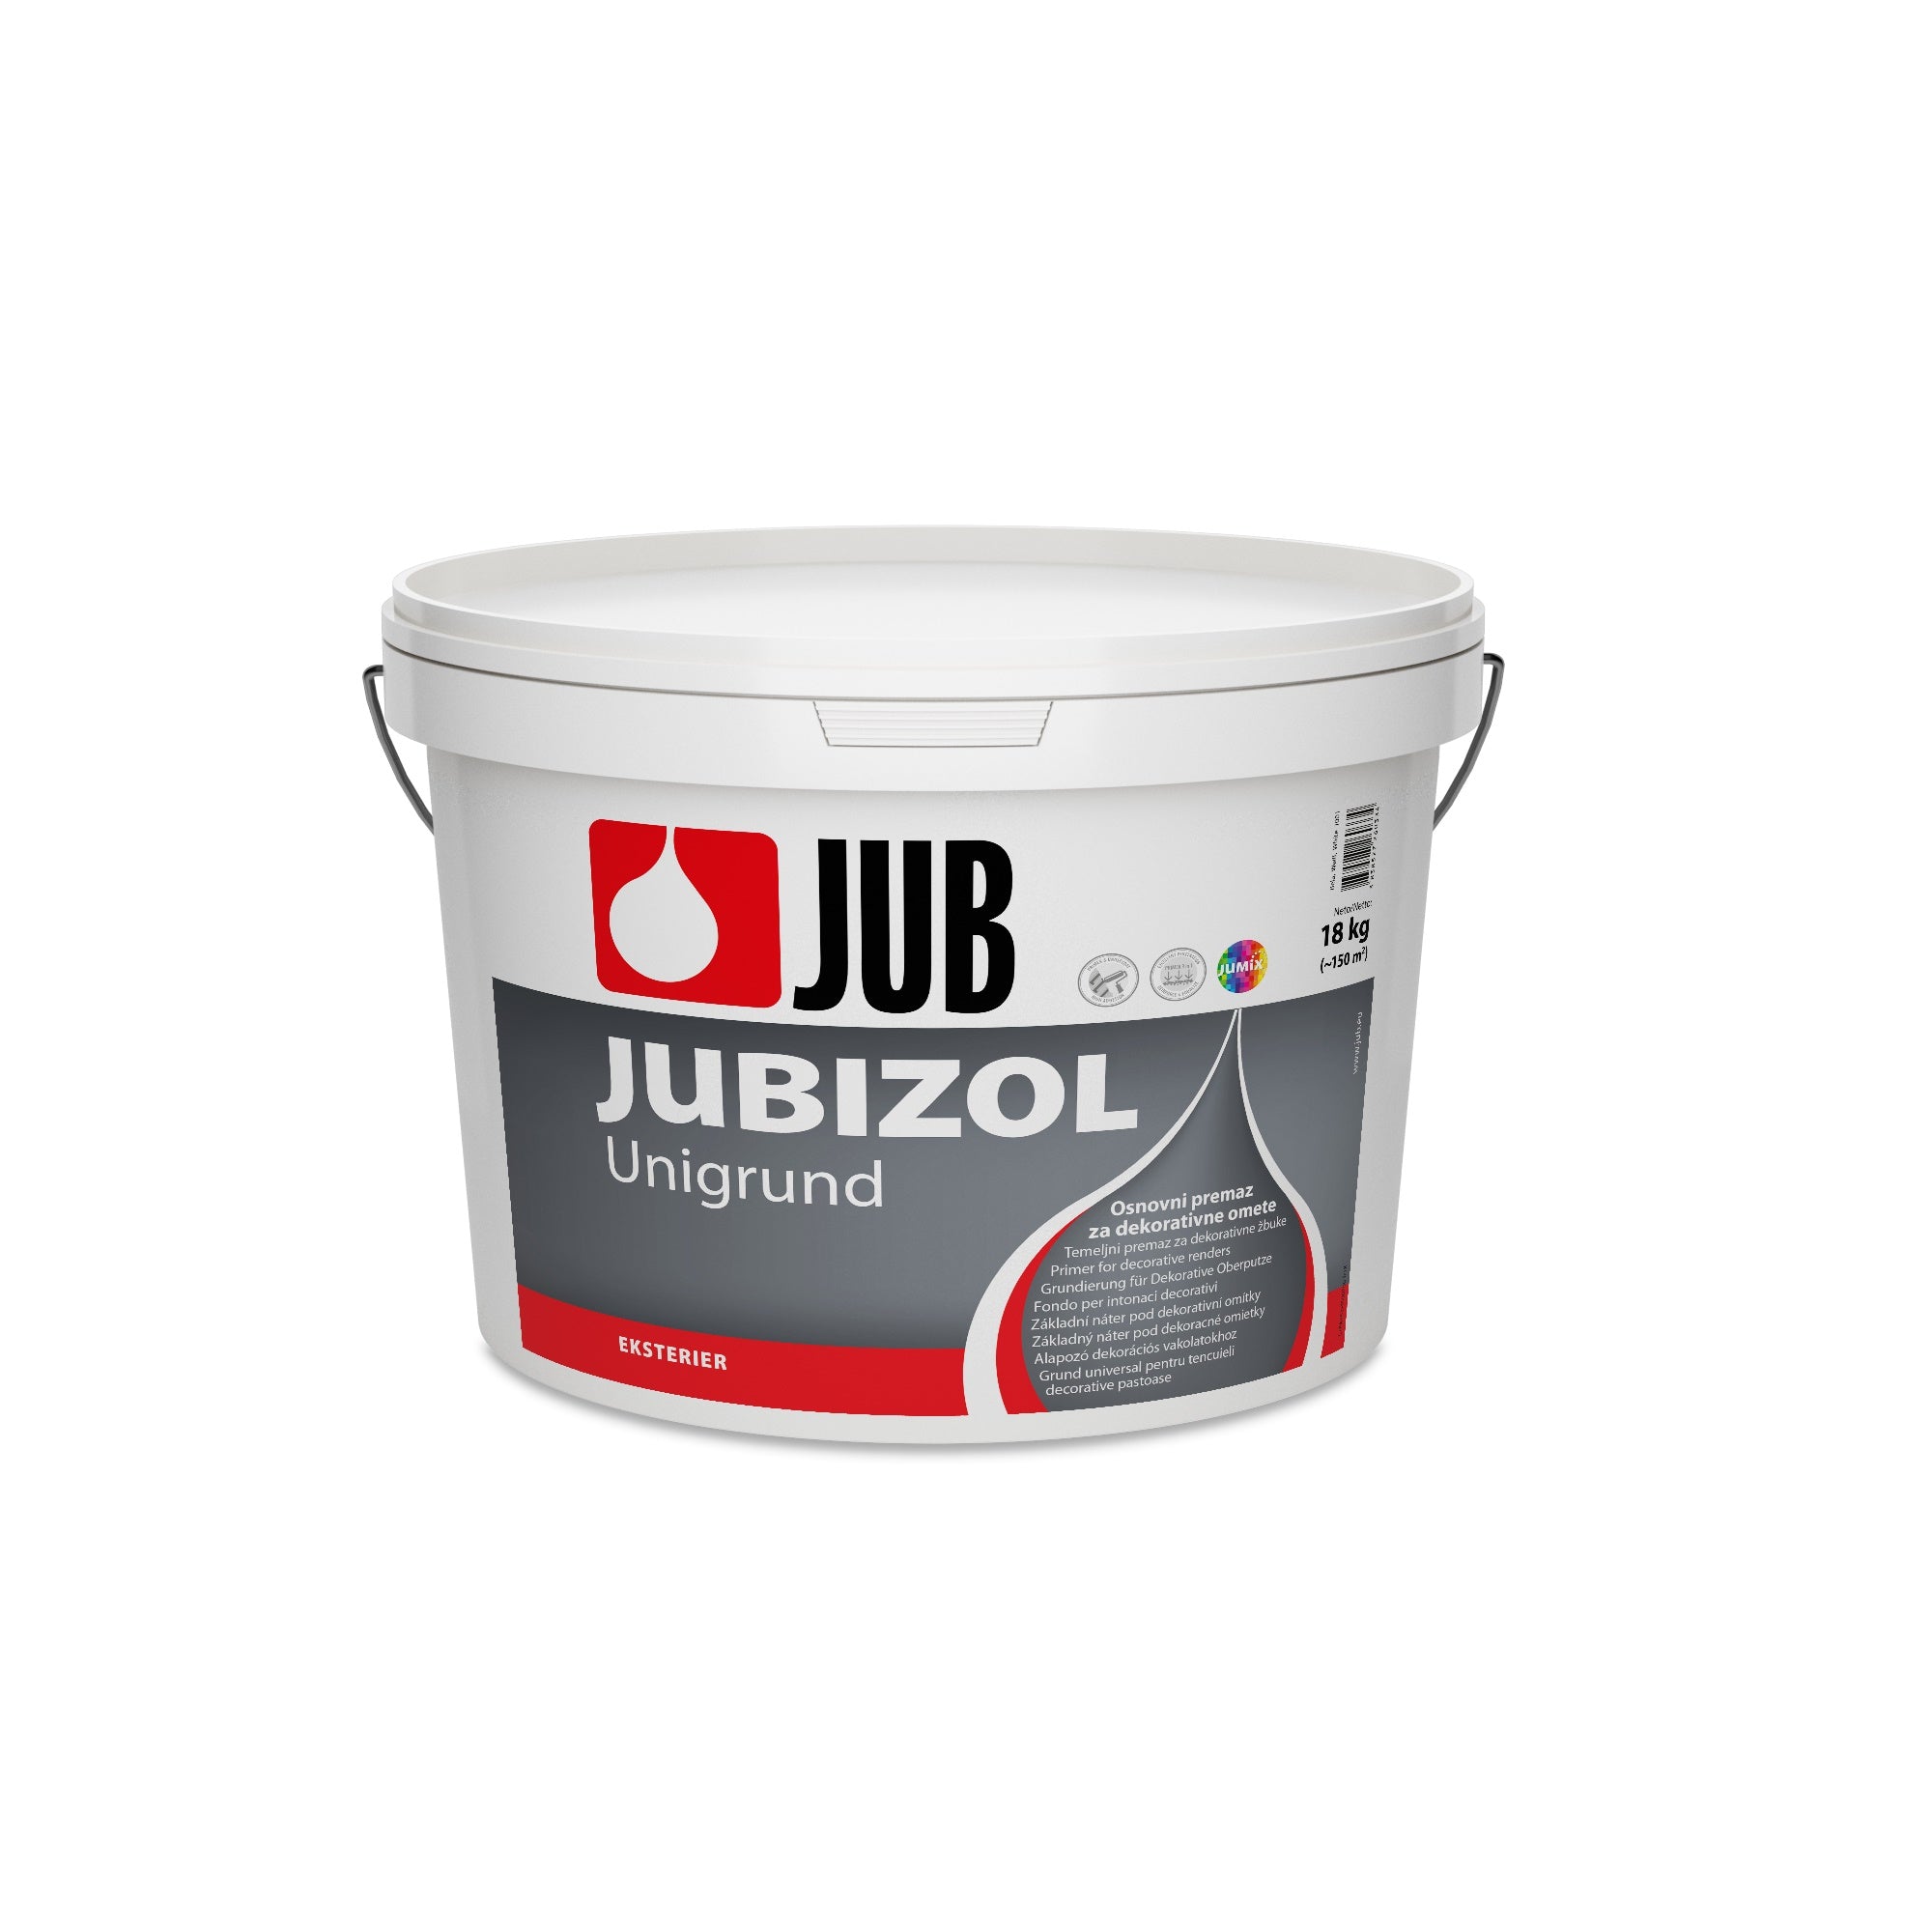 JUB JUBIZOL Unigrund biely univerzálny základný náter 18 kg